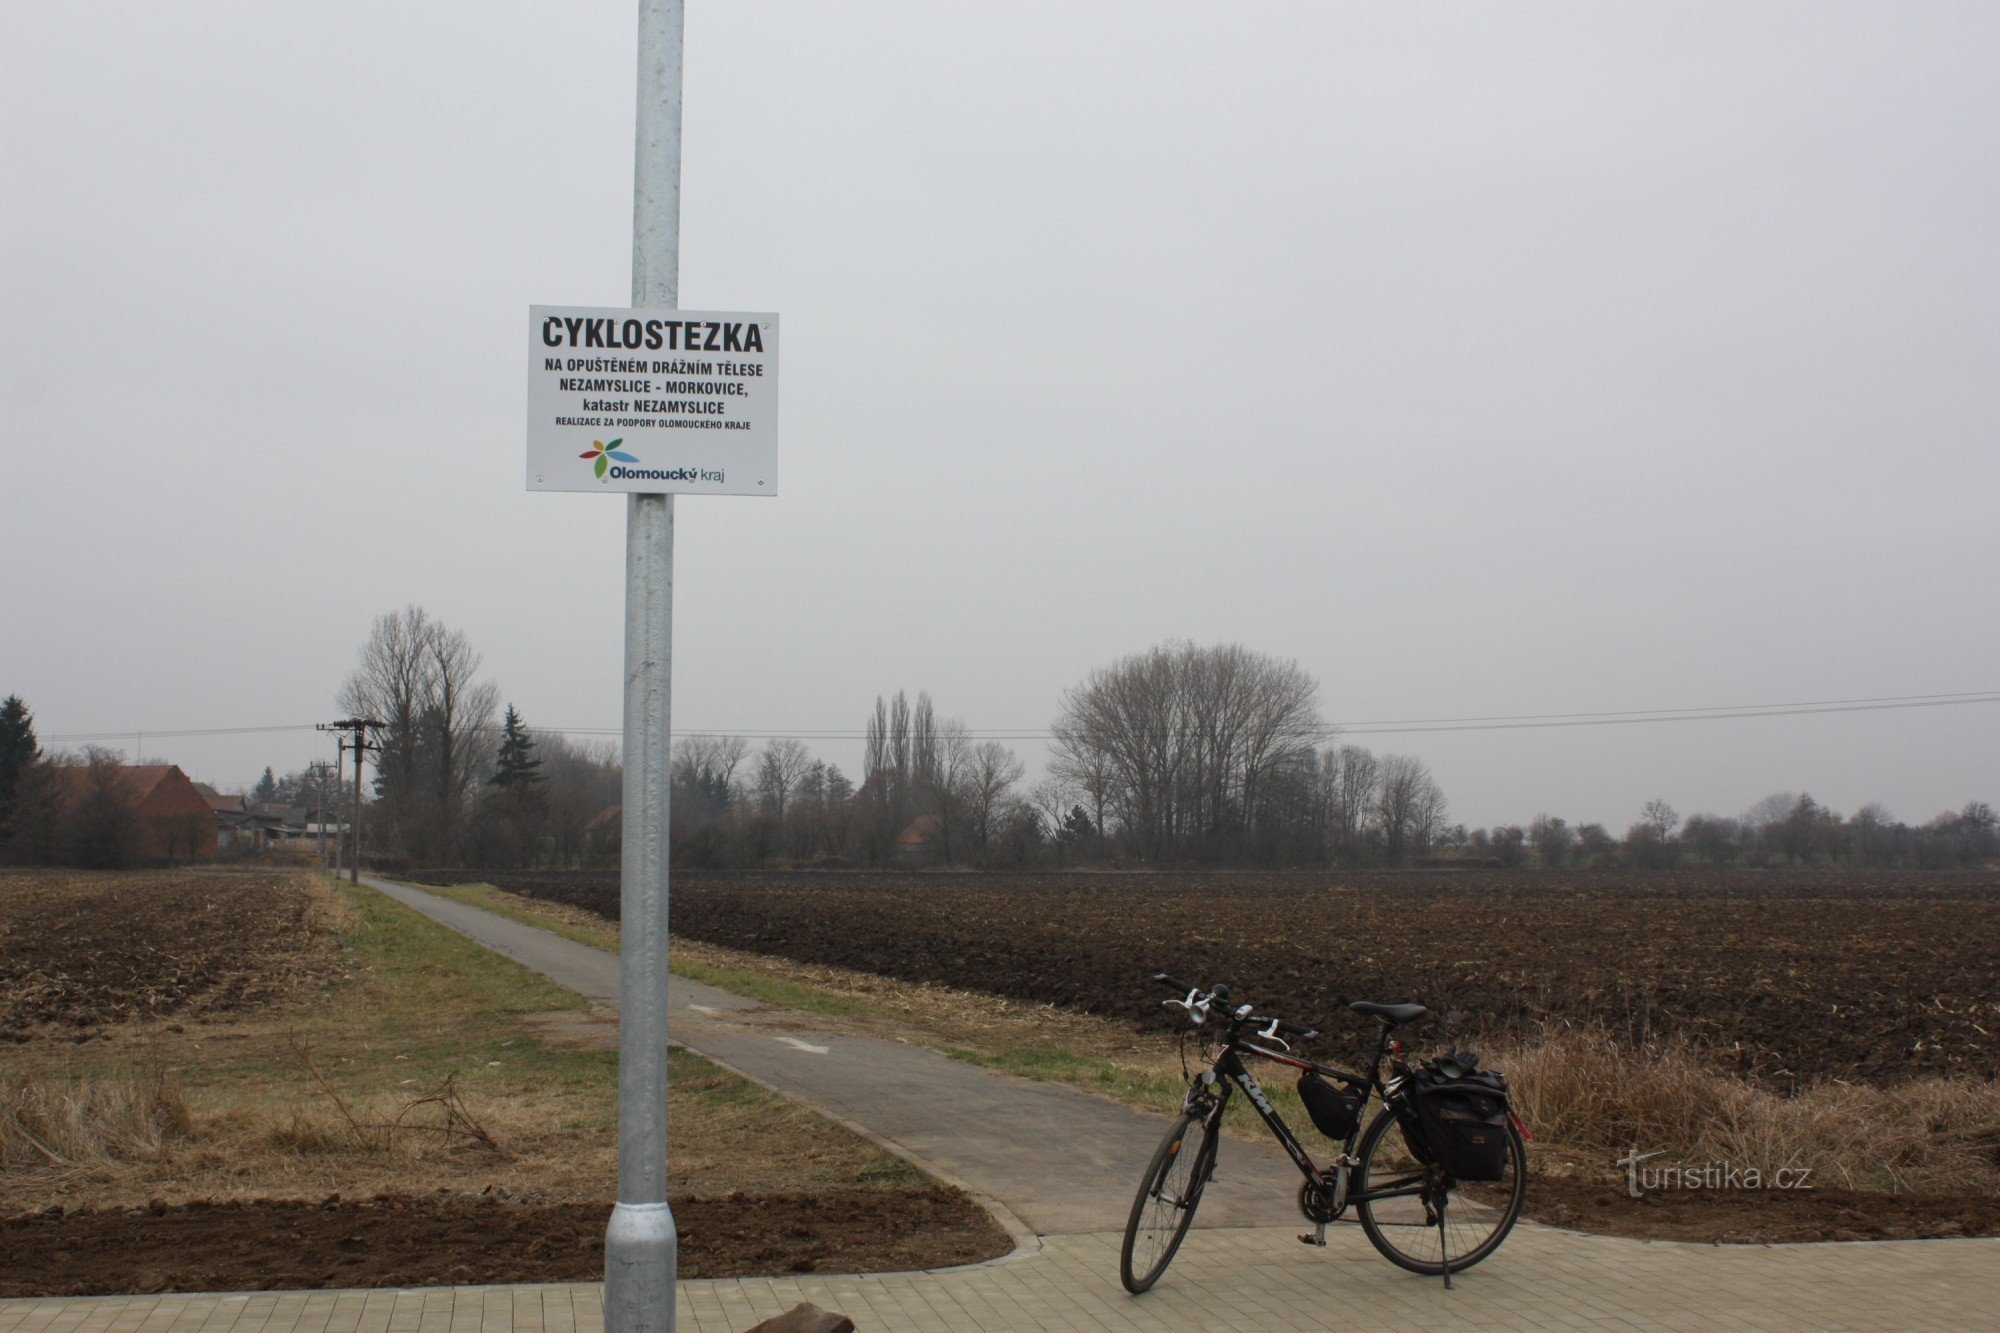 Crossing of the original and new bike path near Těšice